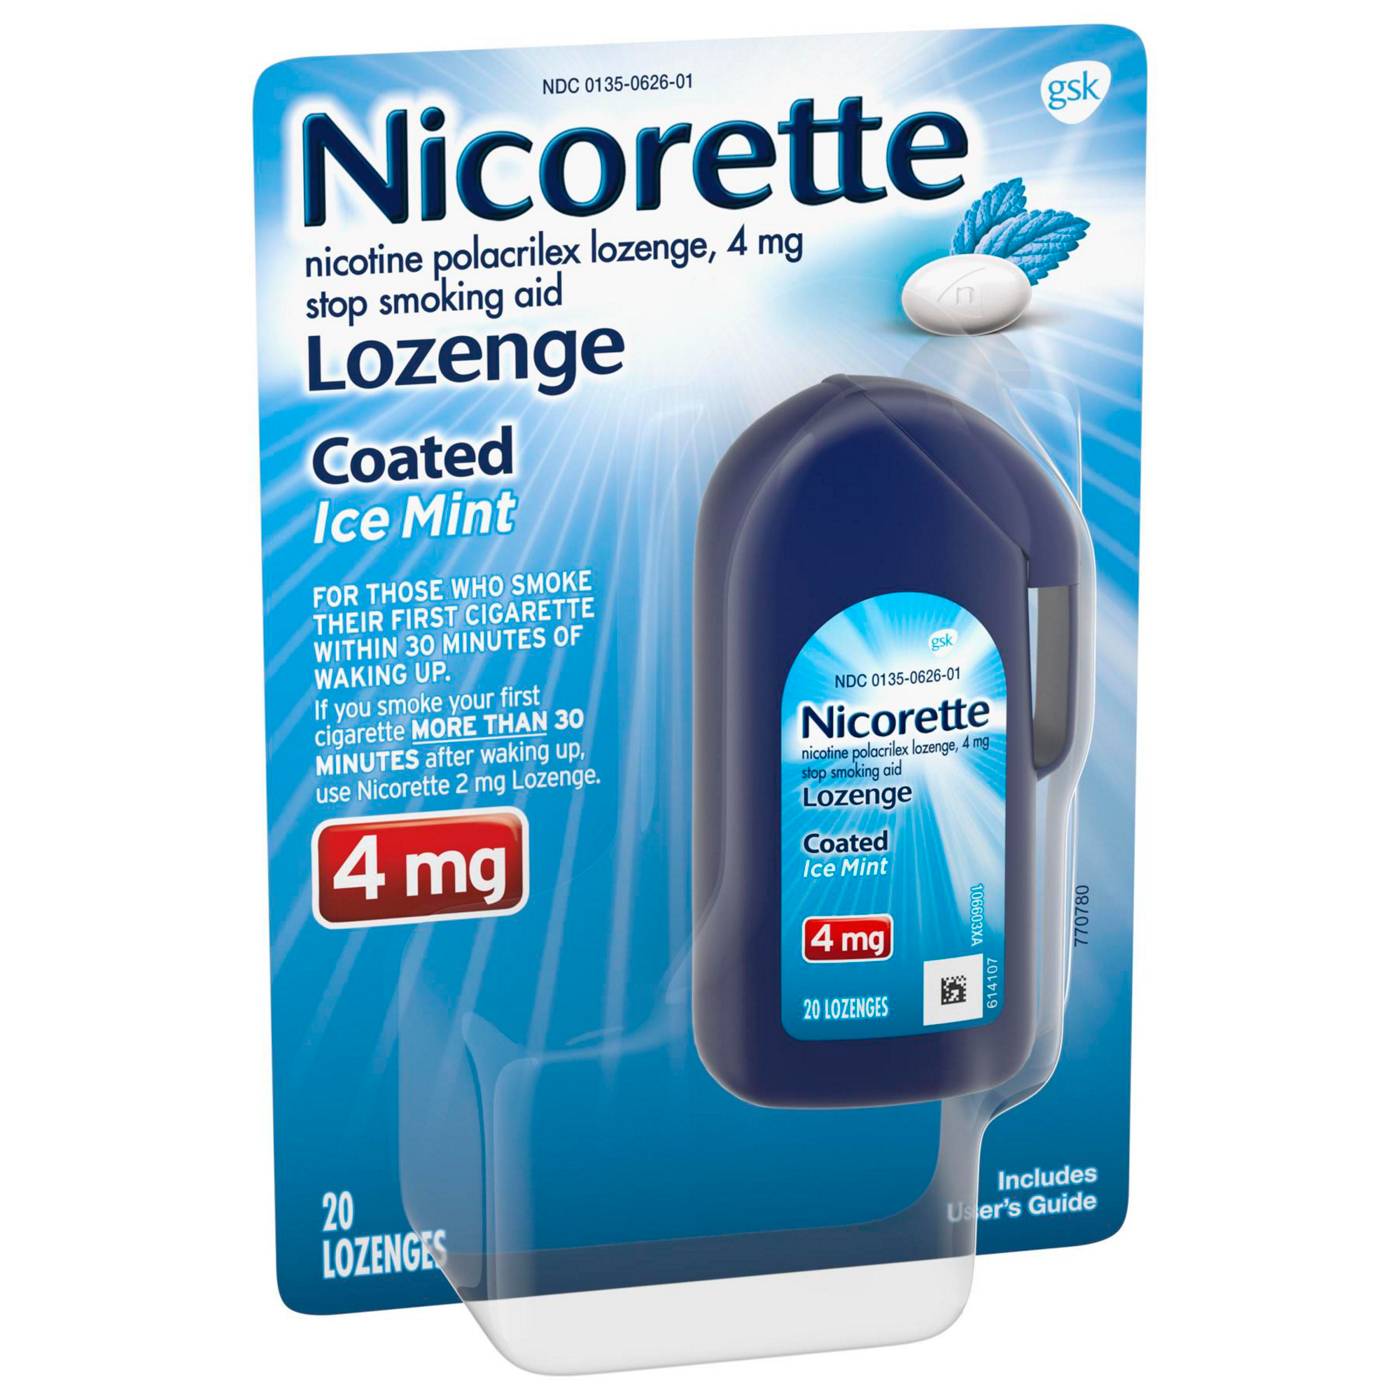 Nicorette Lozenge Coated Ice Mint 4 Mg; image 8 of 9